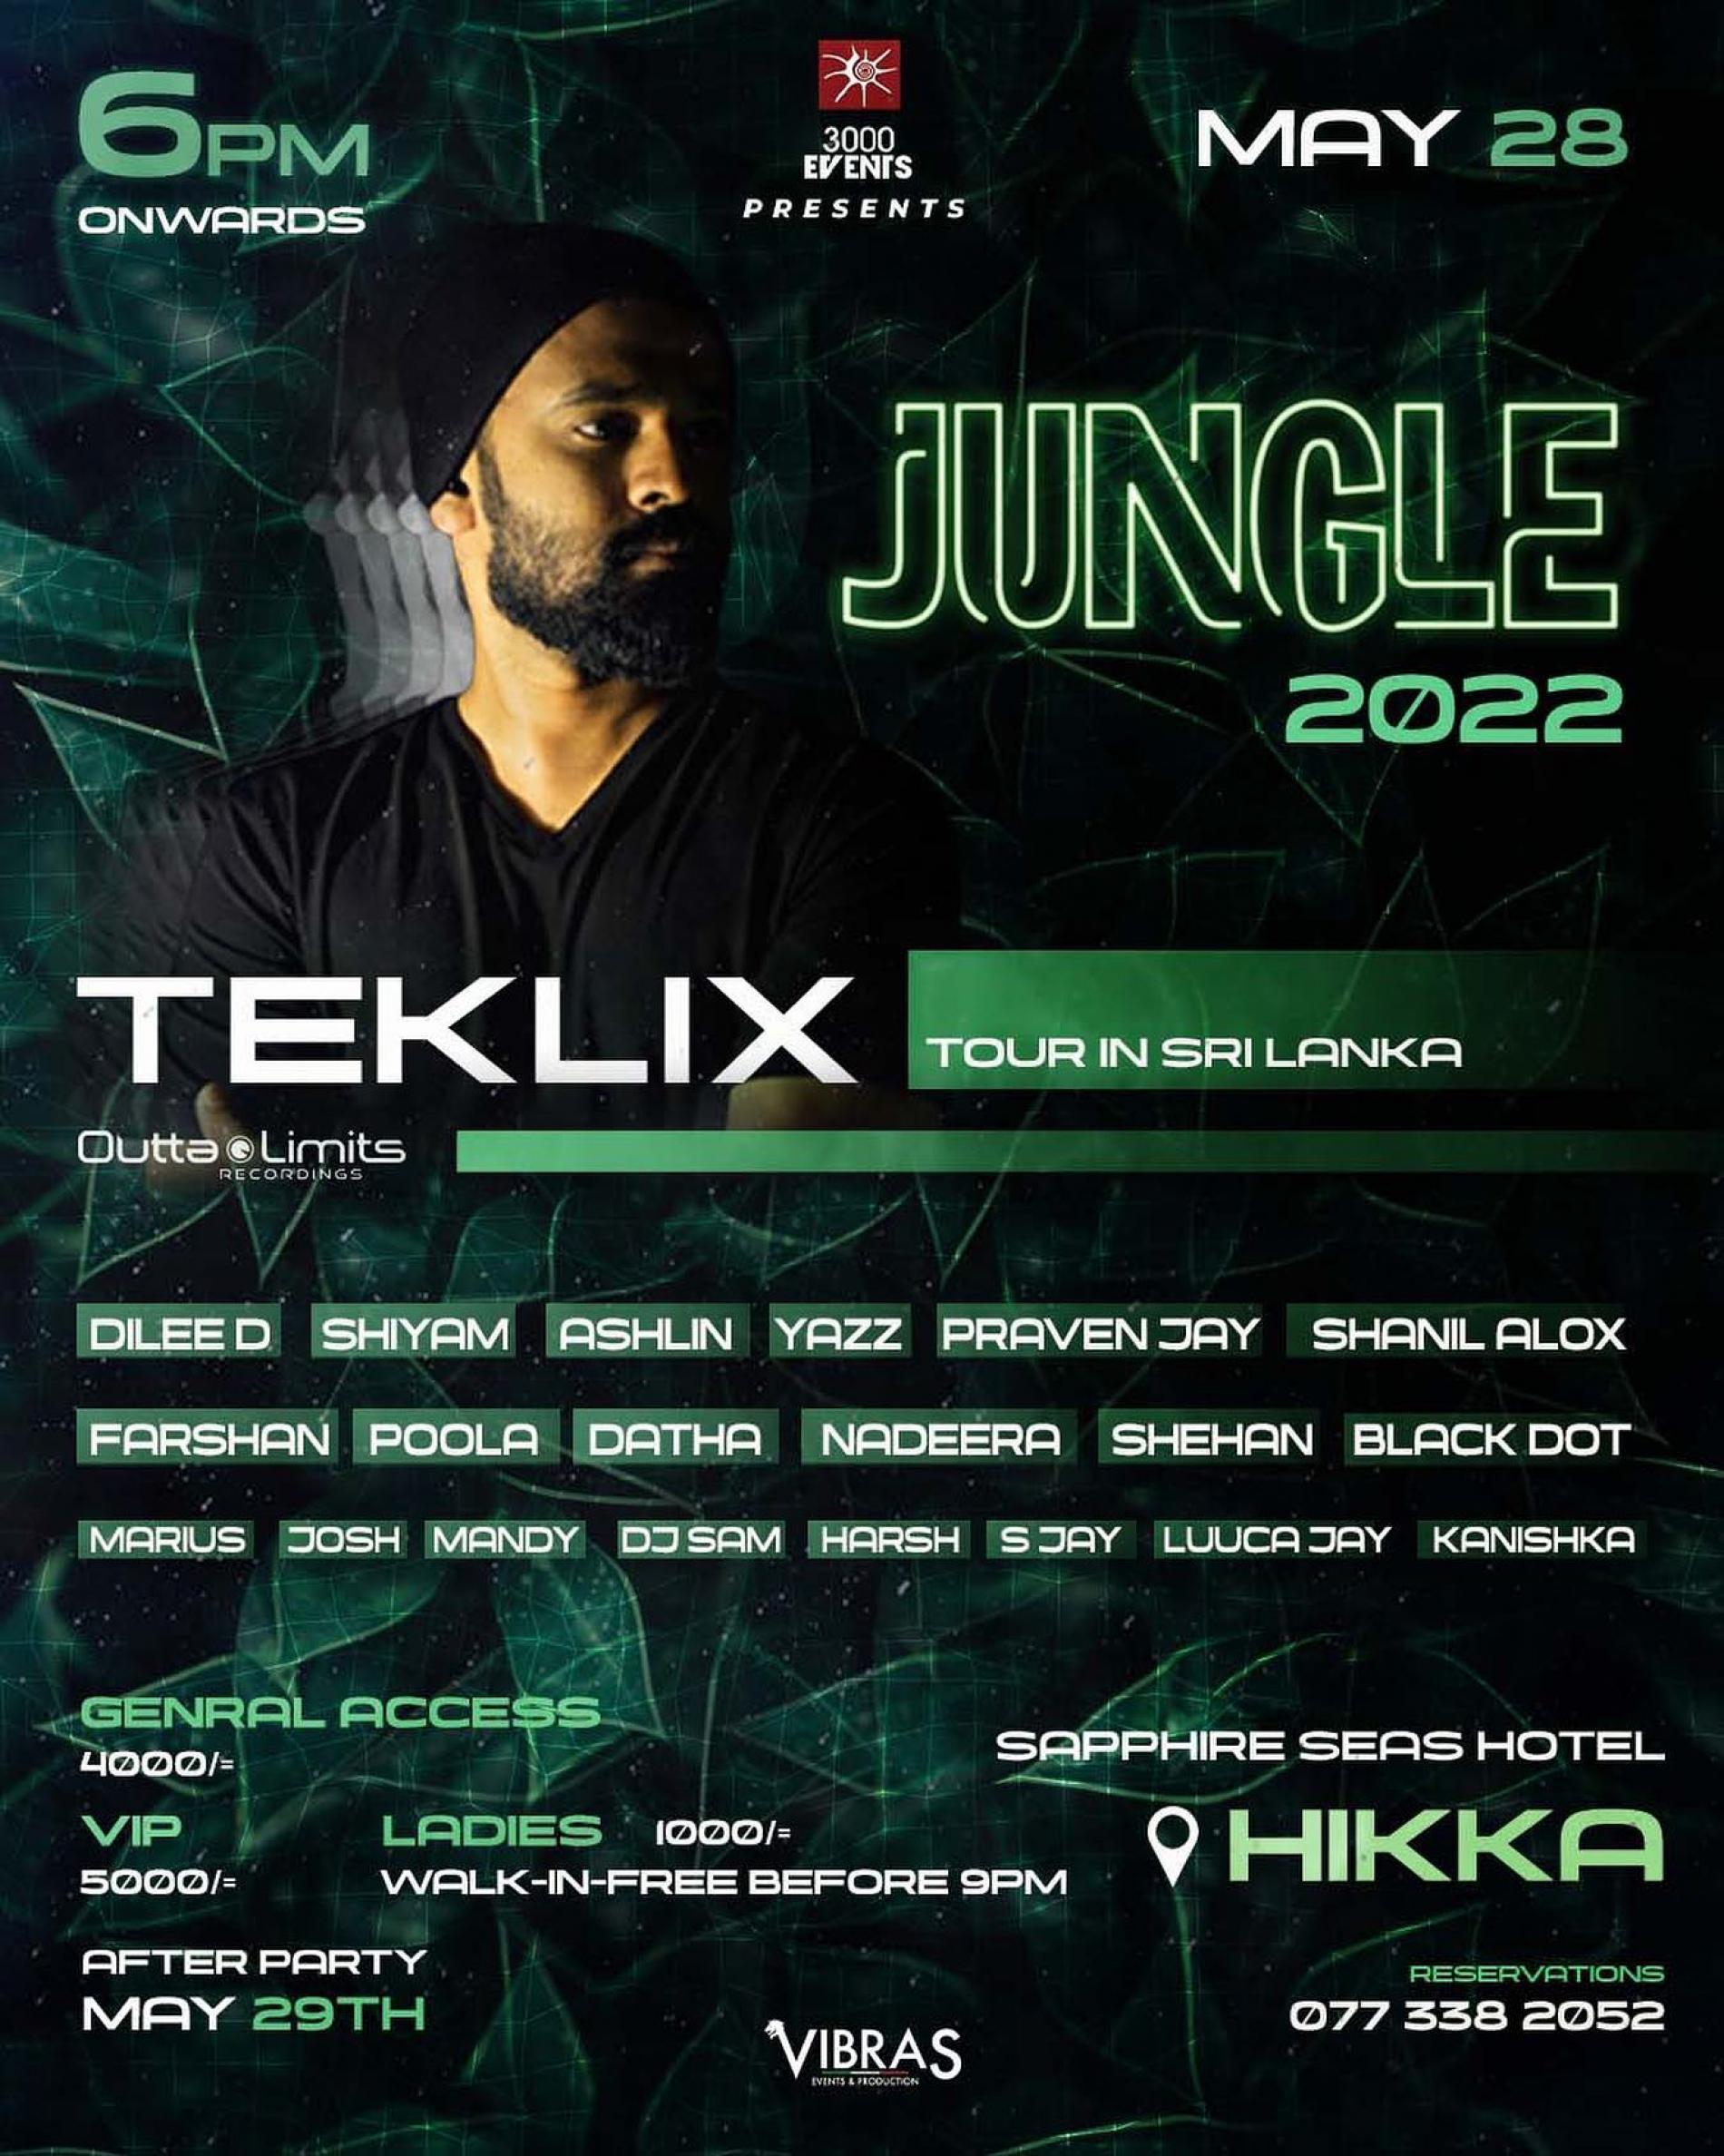 News : Teklix To Play In Sri Lanka!